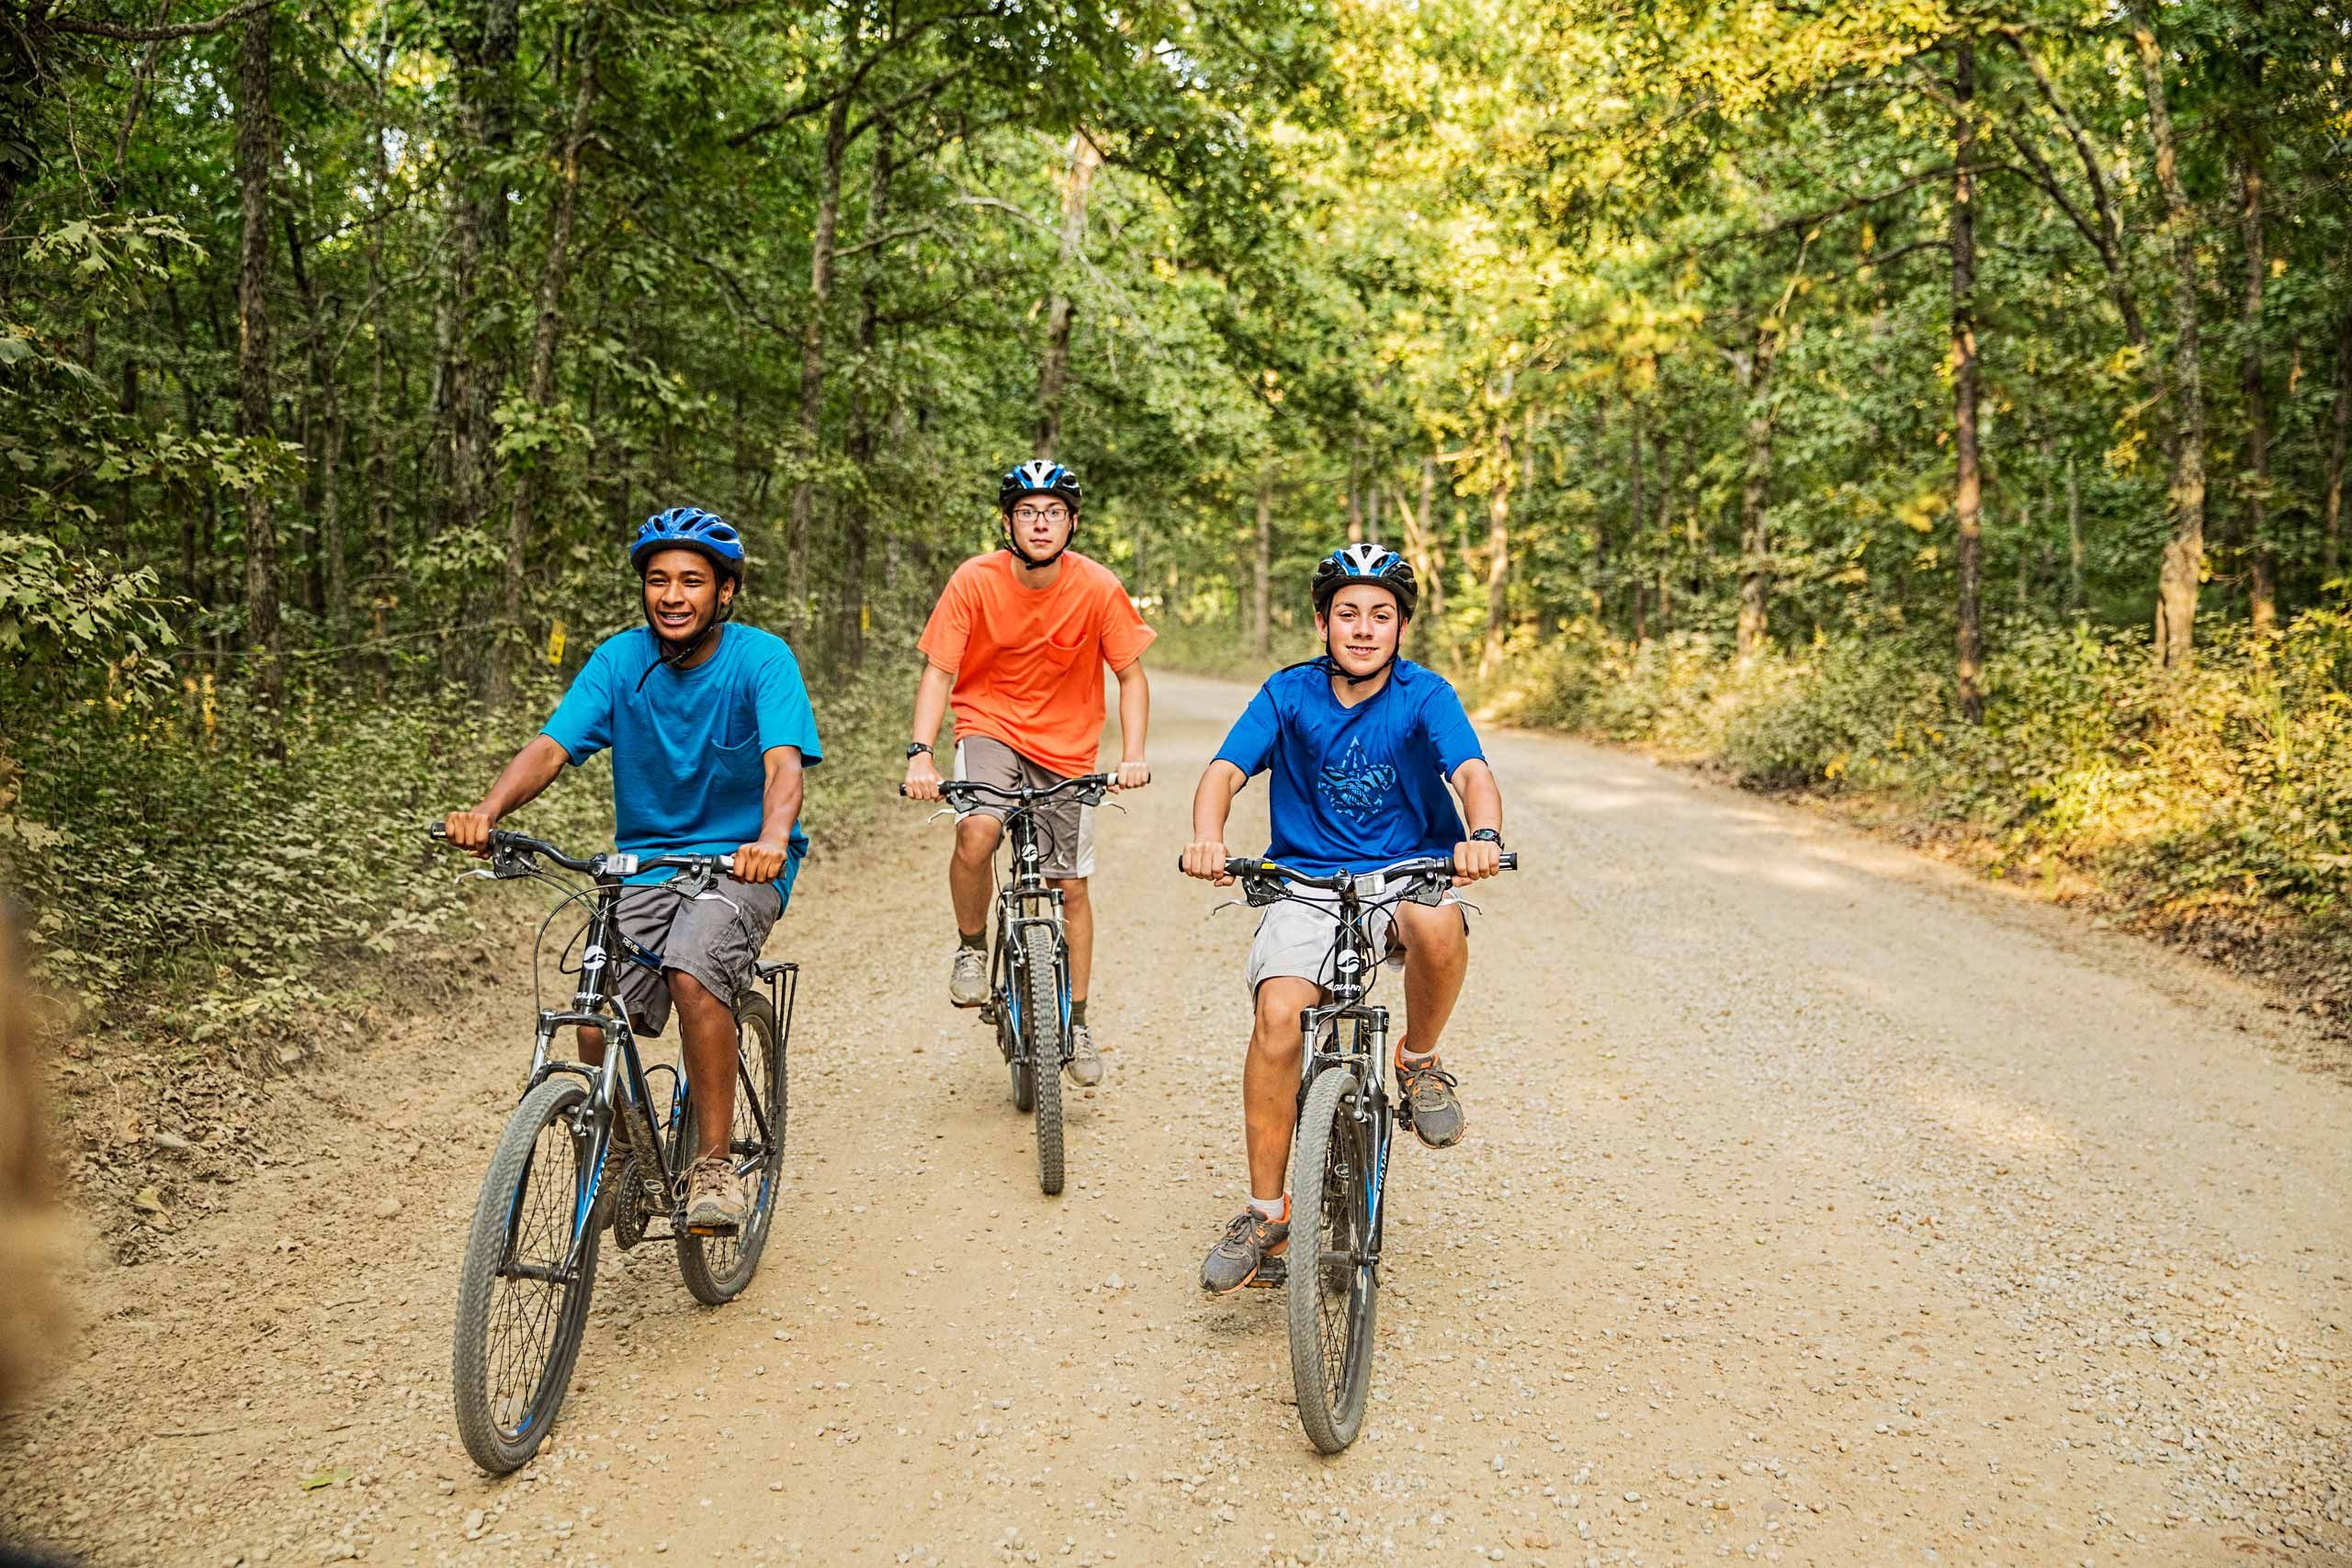 Three Boys Riding Bikes on a Dirt Road.